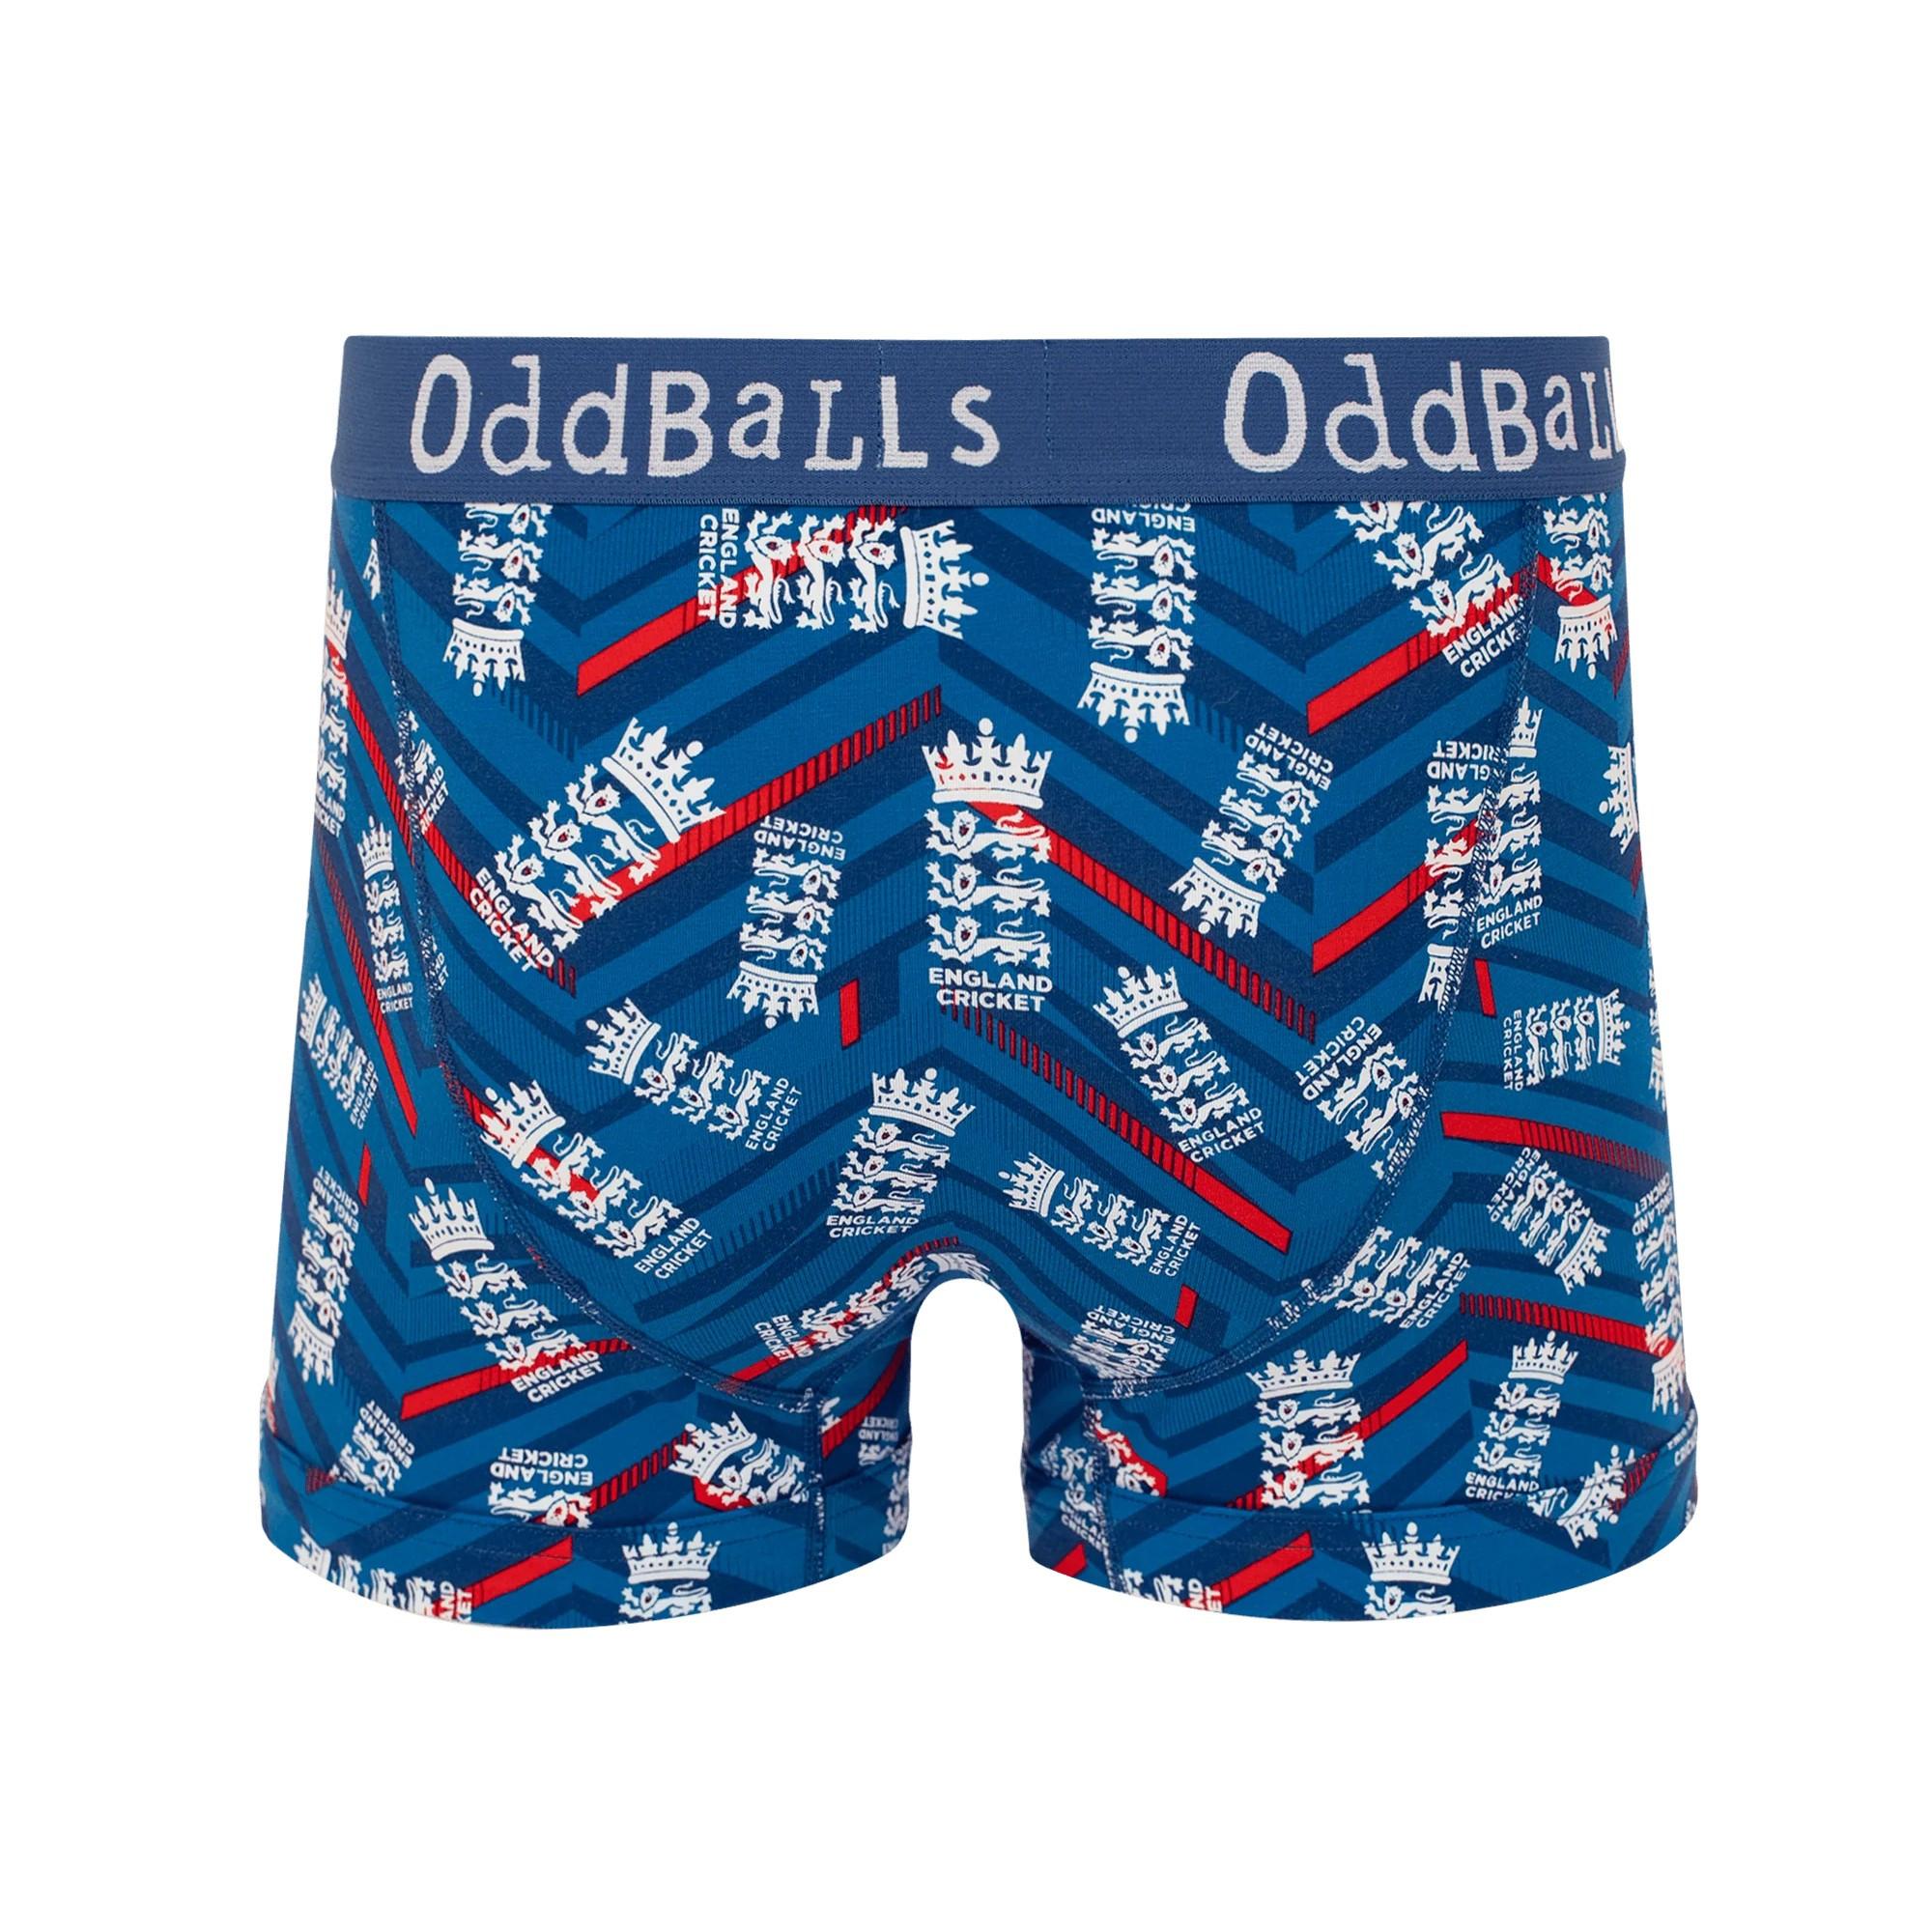 OddBalls  ODI Inspired Boxershorts 